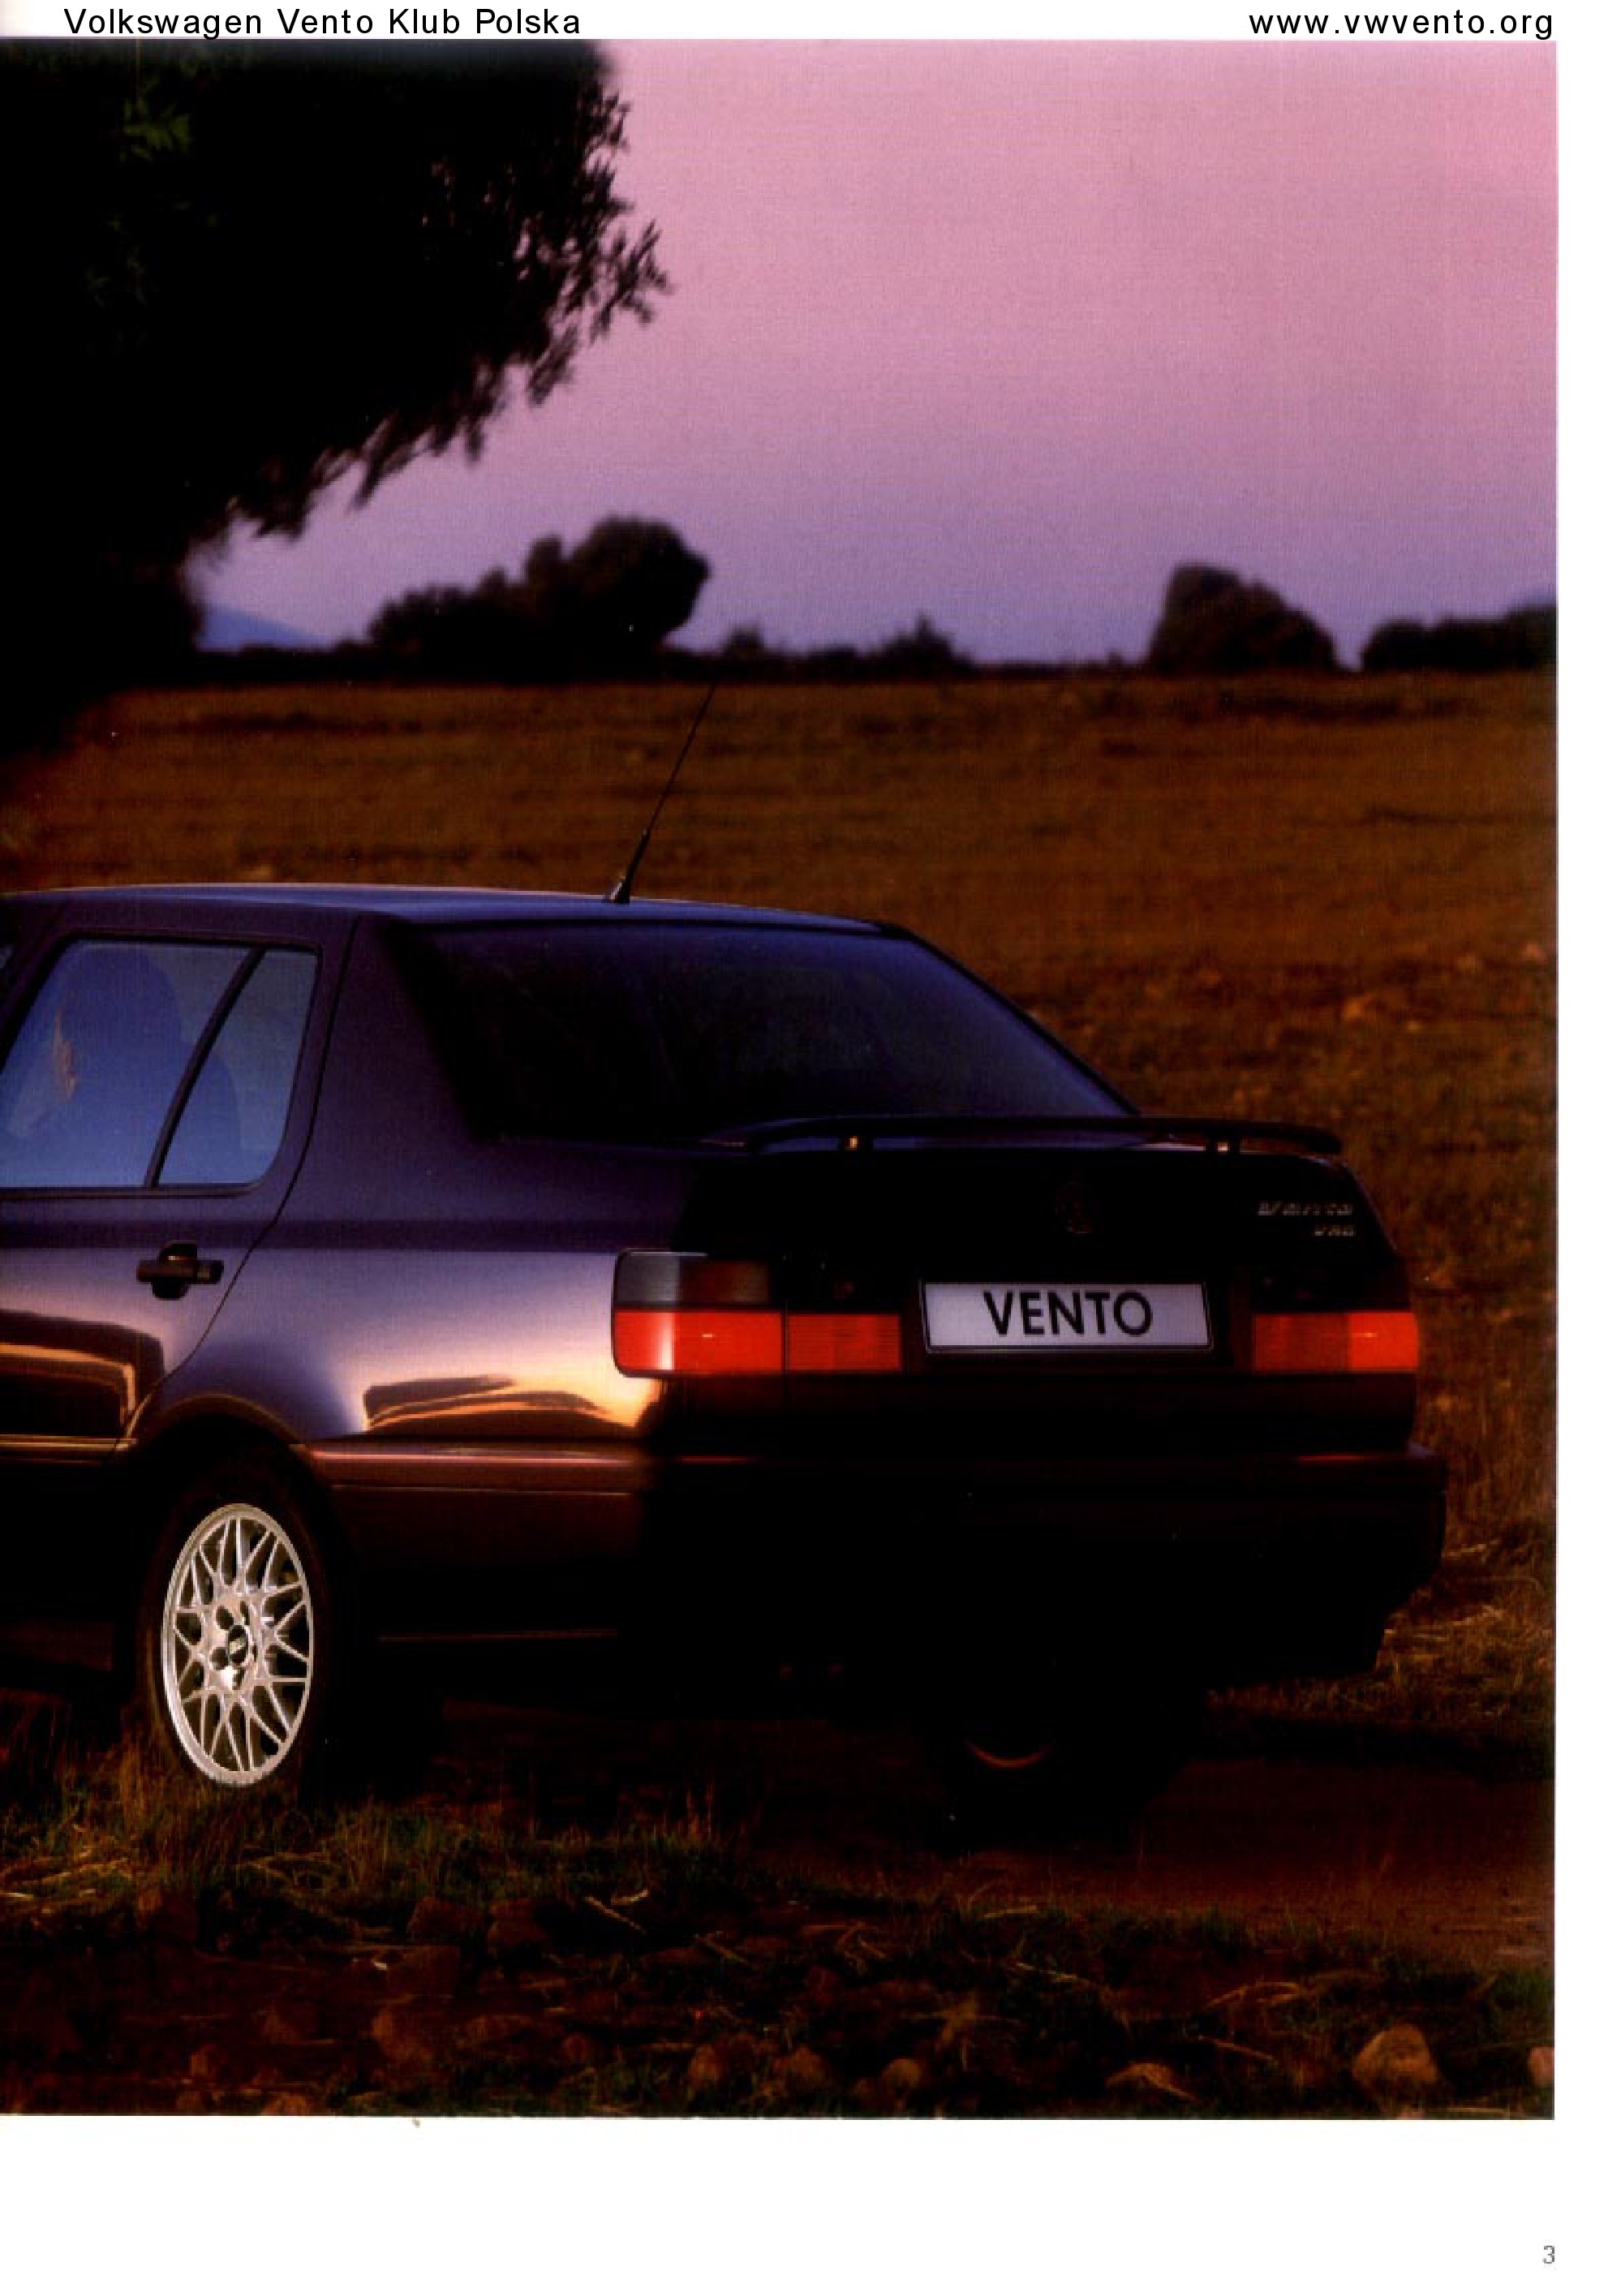 VW Vento 95 PL - 0004.jpg